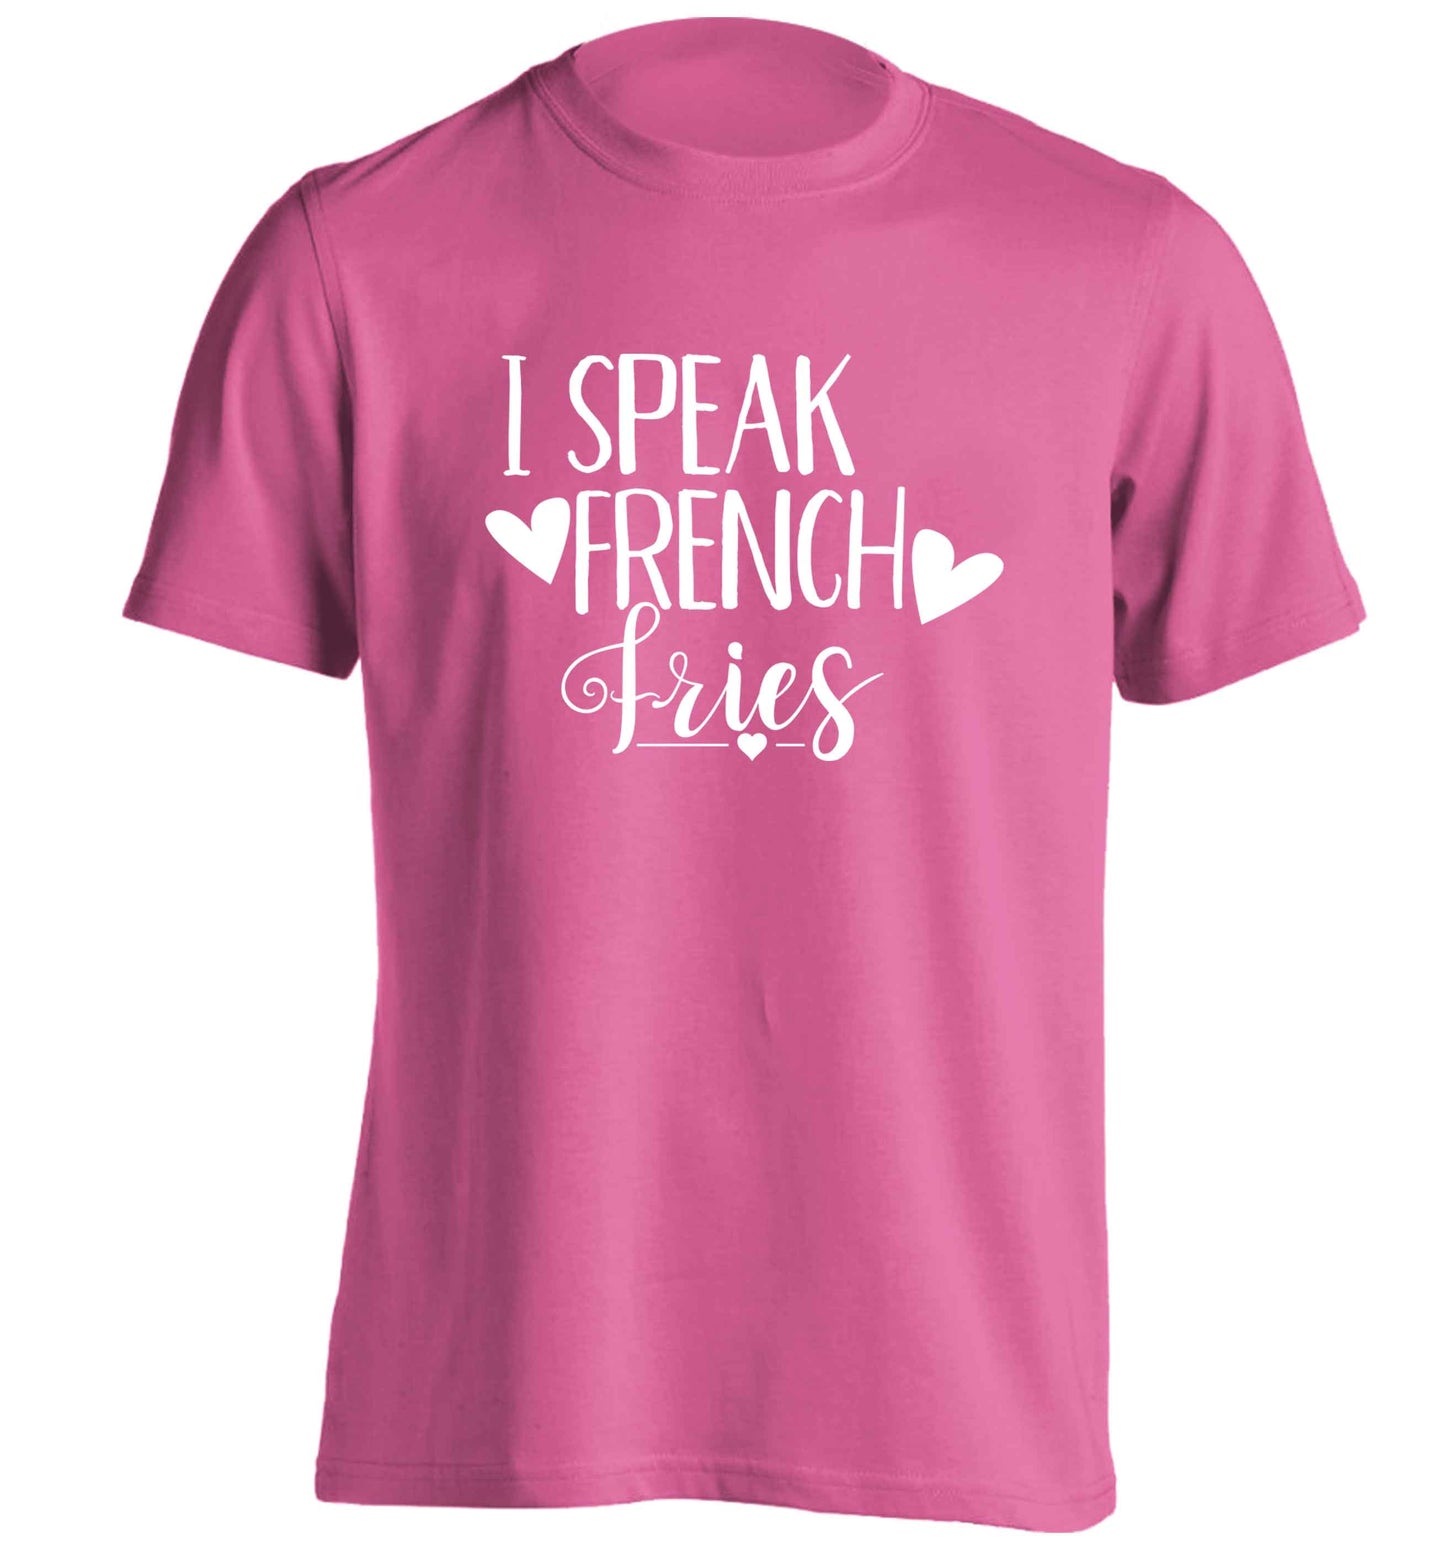 I speak French fries adults unisex pink Tshirt 2XL